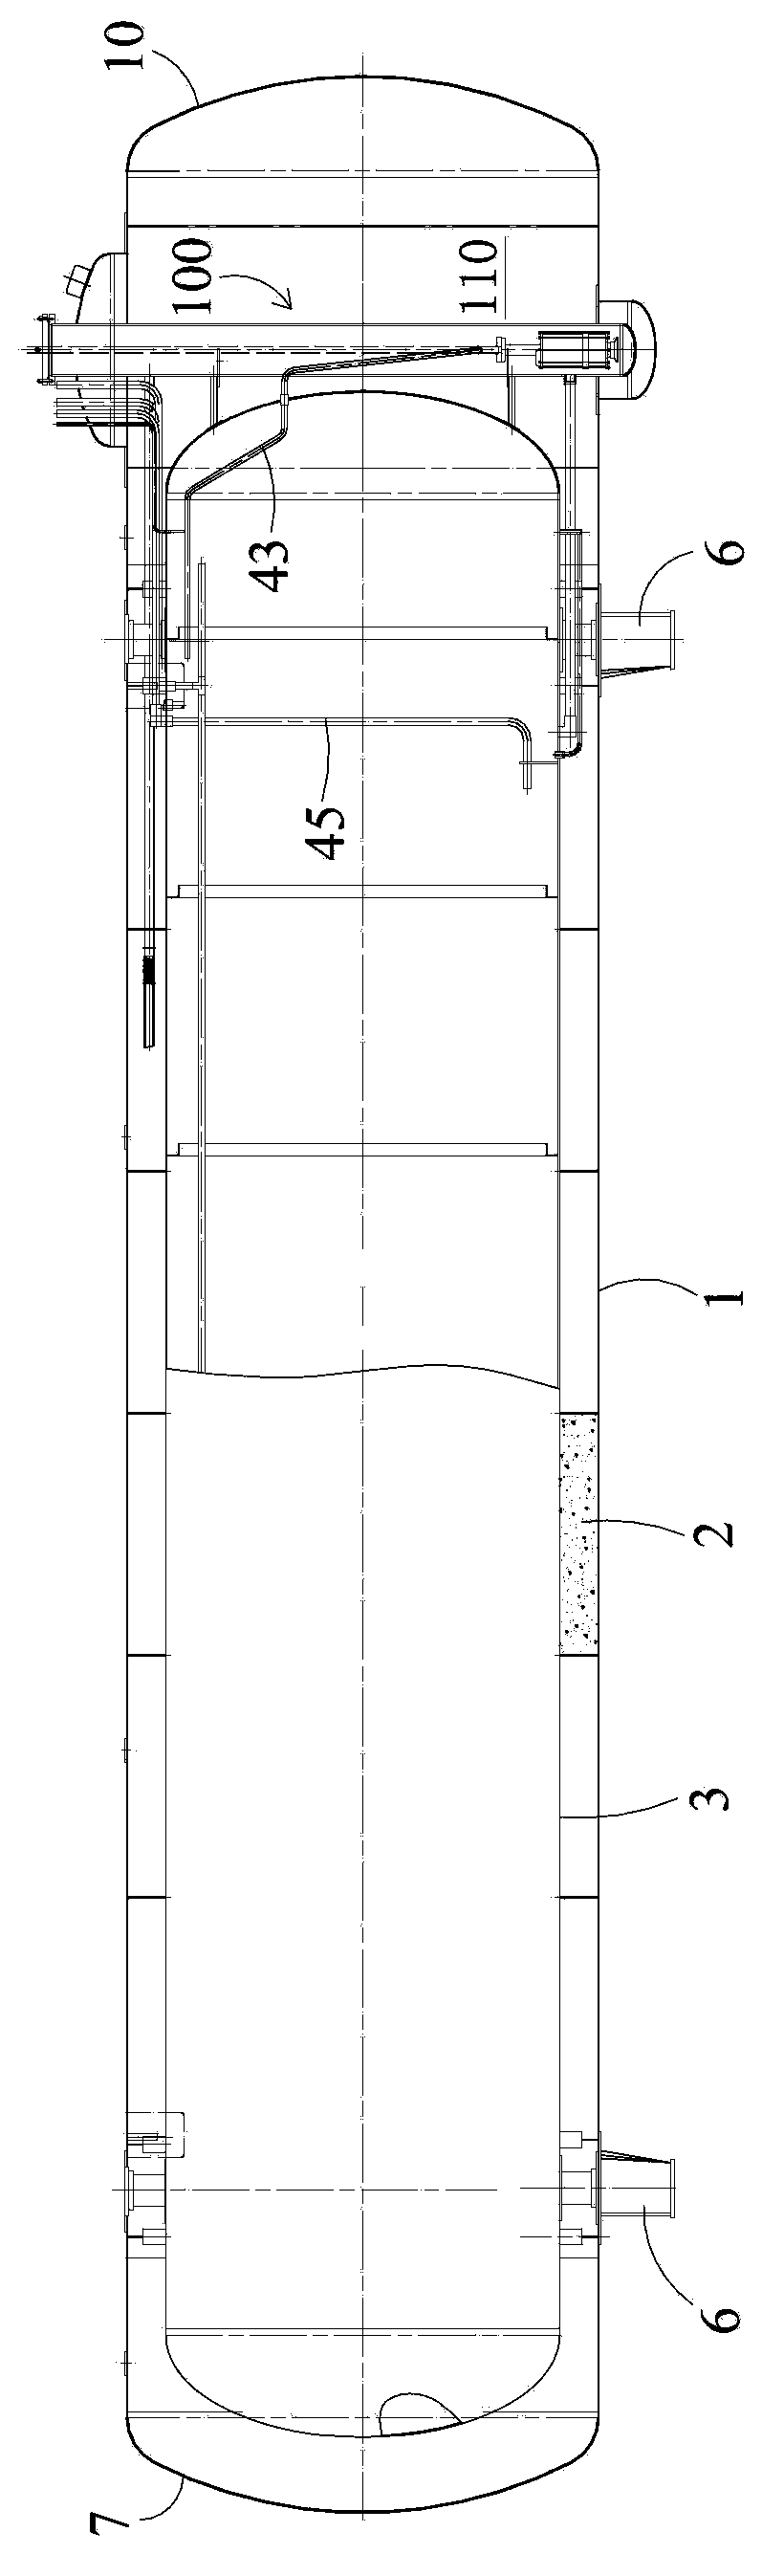 Horizontal double-layer buried storage tank